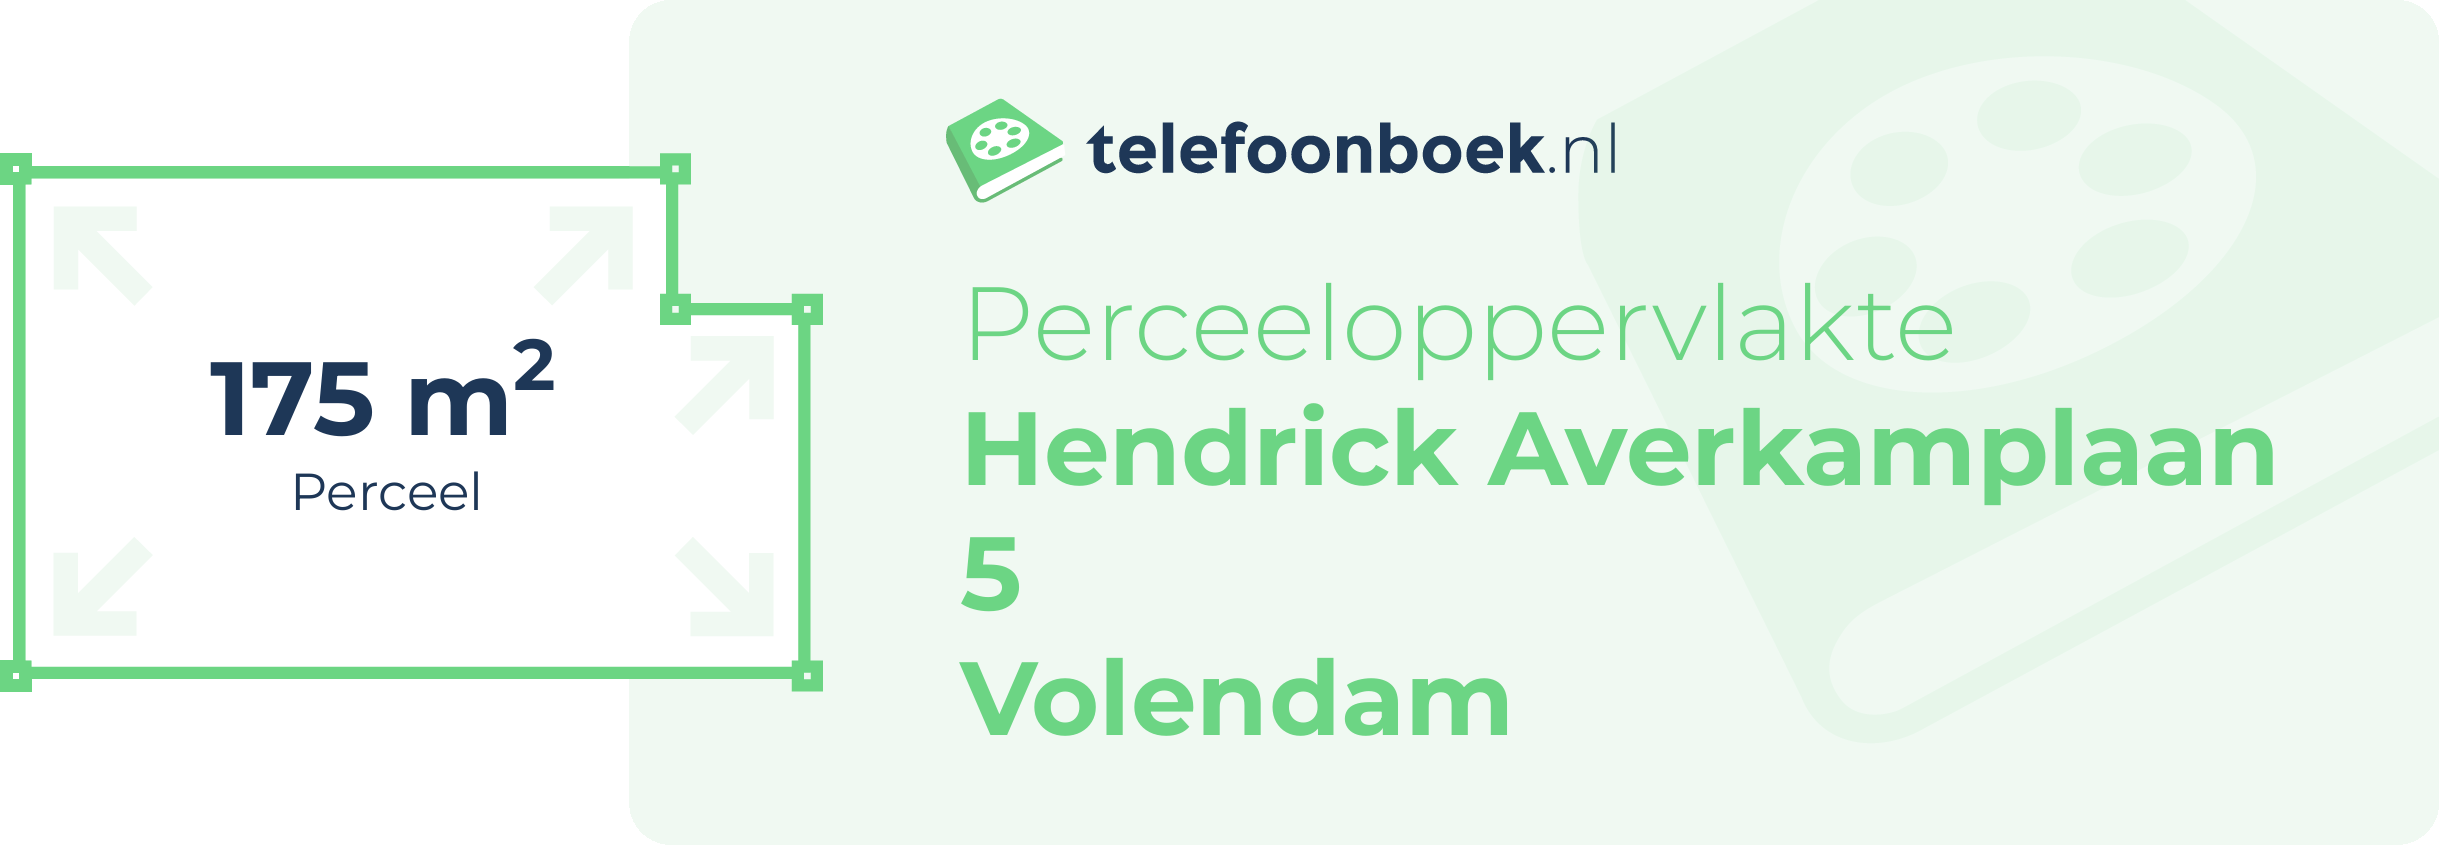 Perceeloppervlakte Hendrick Averkamplaan 5 Volendam